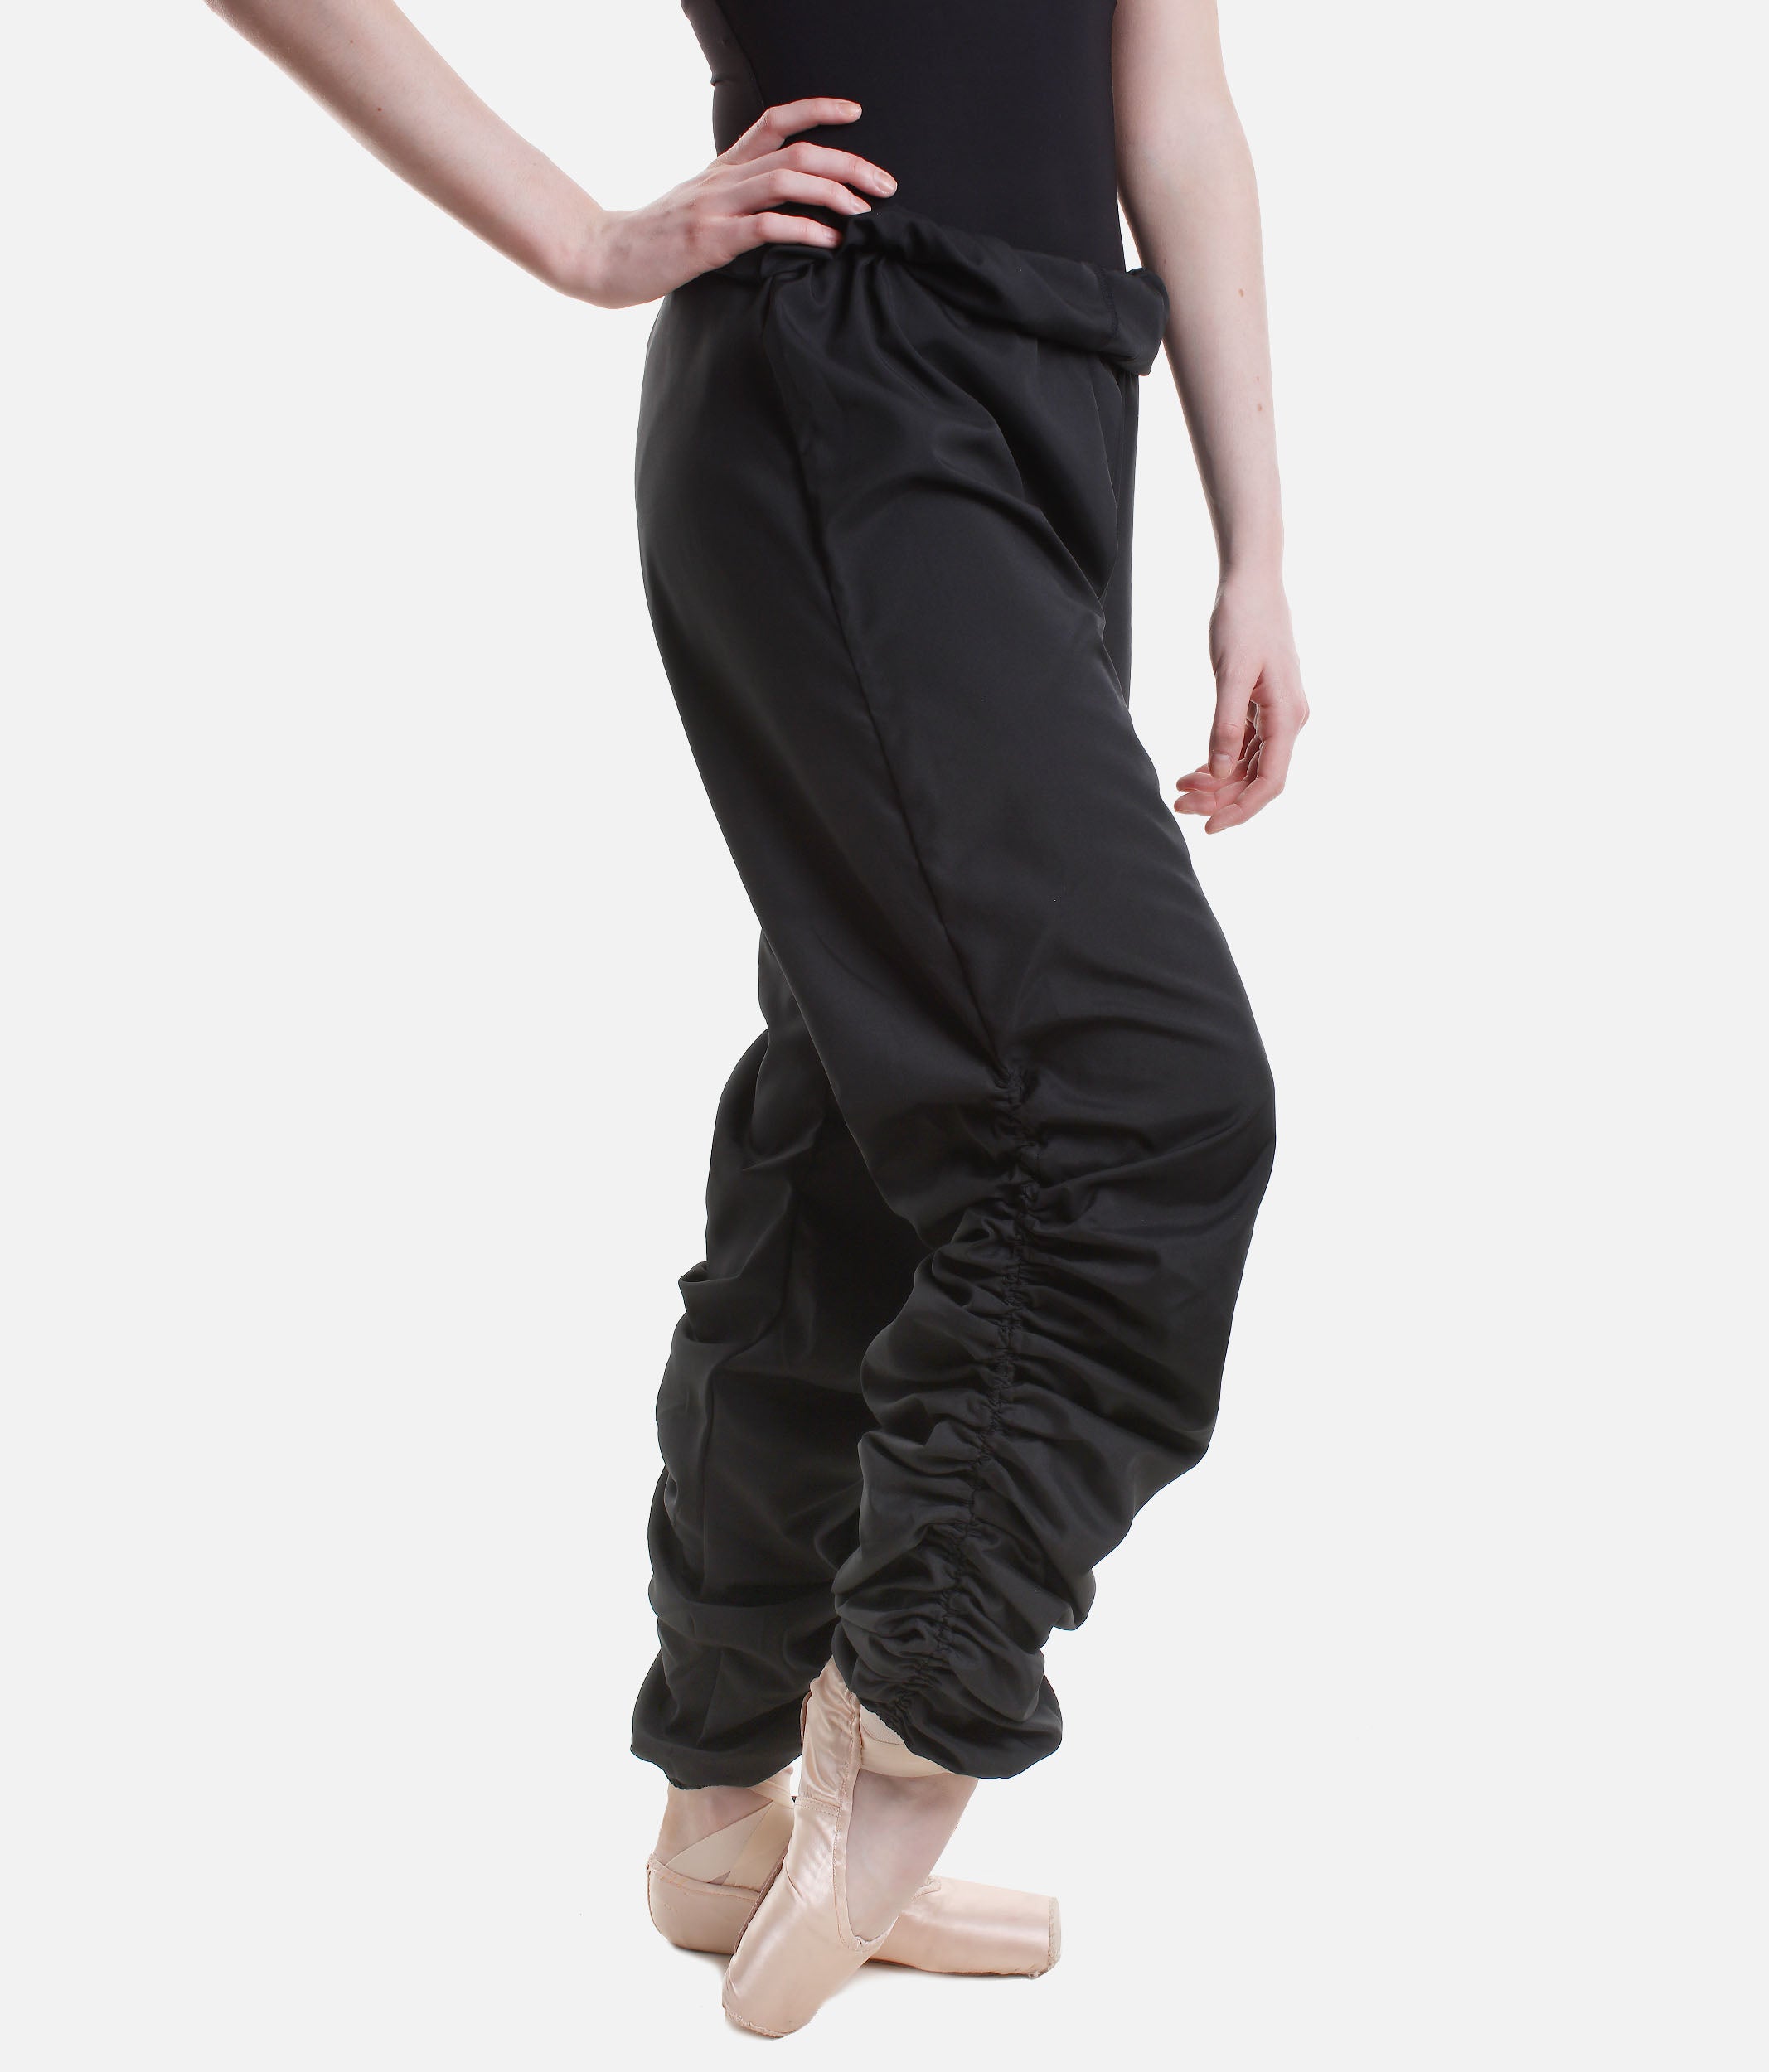 Black Warm-up Dance Harem Pants MP912 - Atelier della Danza MP